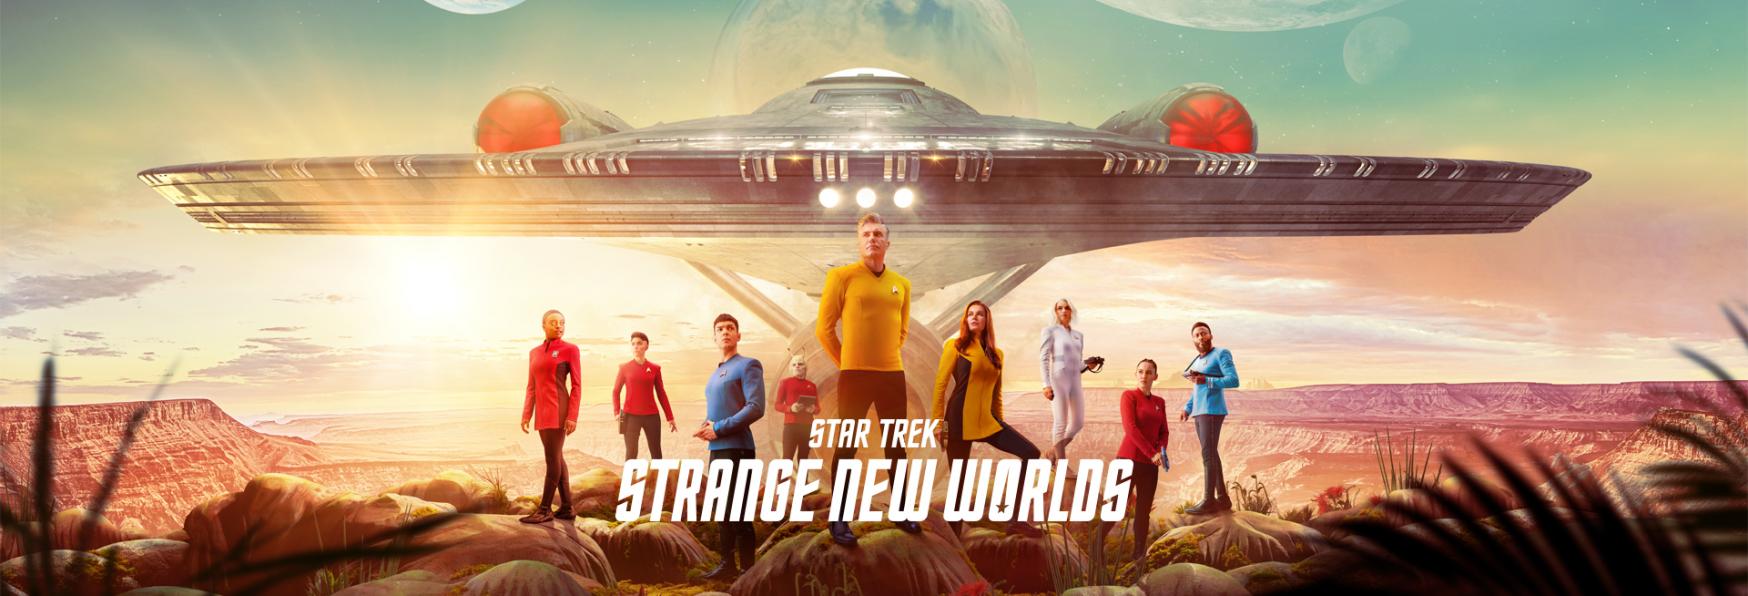 Star Trek: Strange New Worlds 3 ci sarà! Paramount+ rinnova la Serie TV e svela la Data di Uscita della 2ª